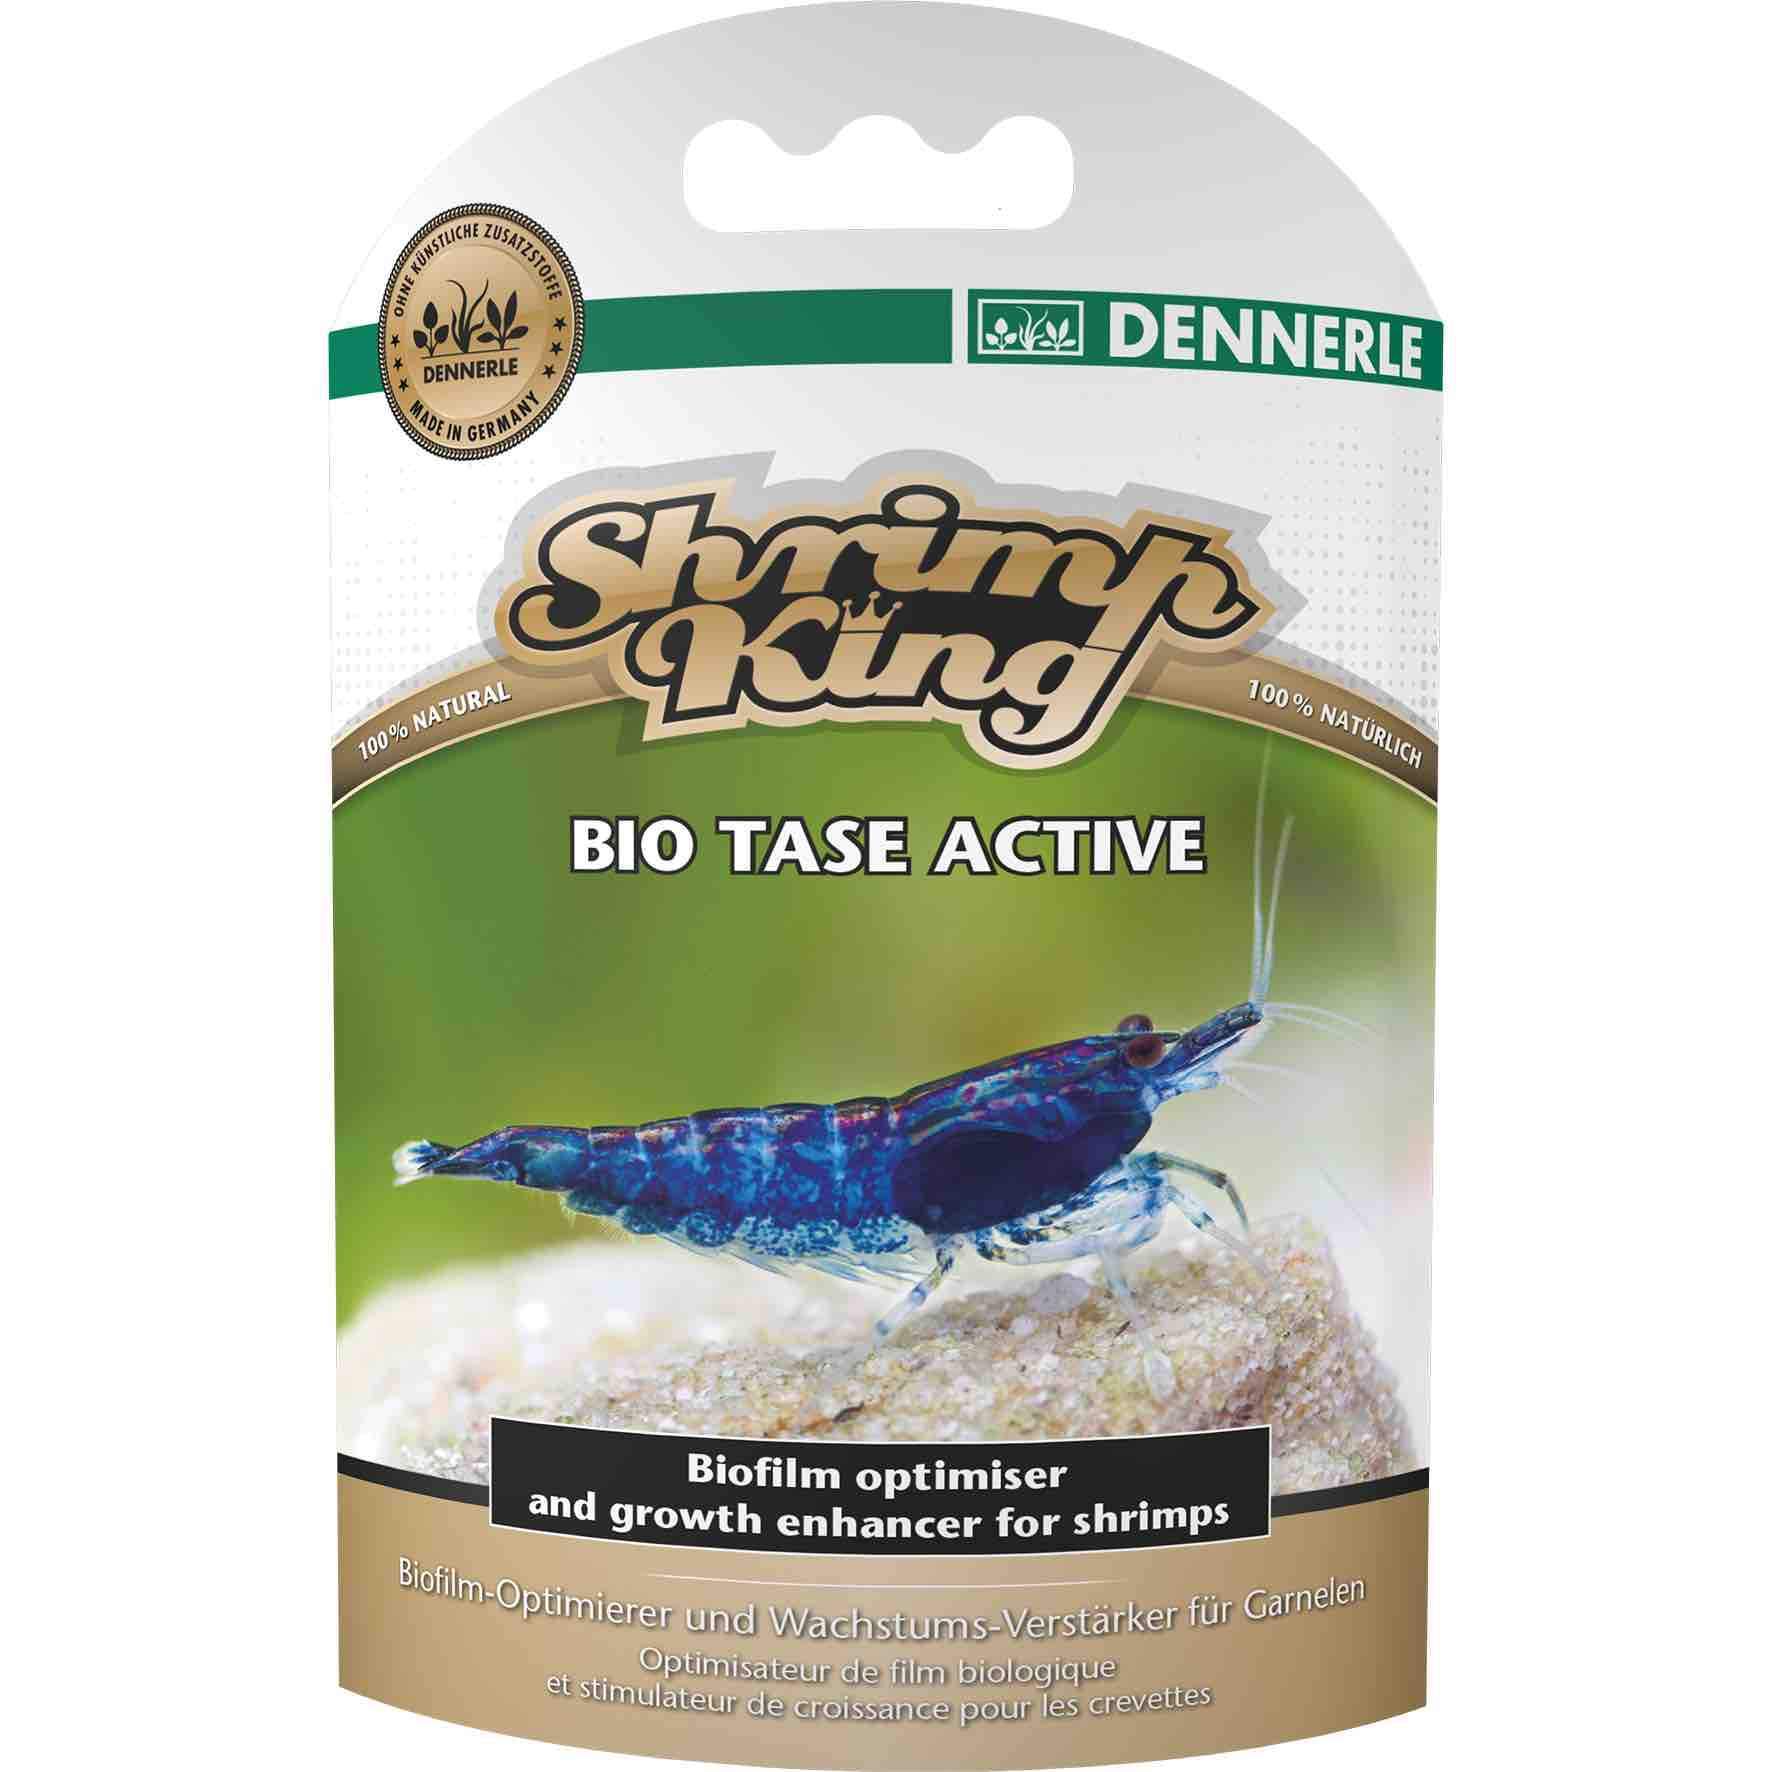 Aquarium Food Shrimp King Bio Tase Active - Dennerle